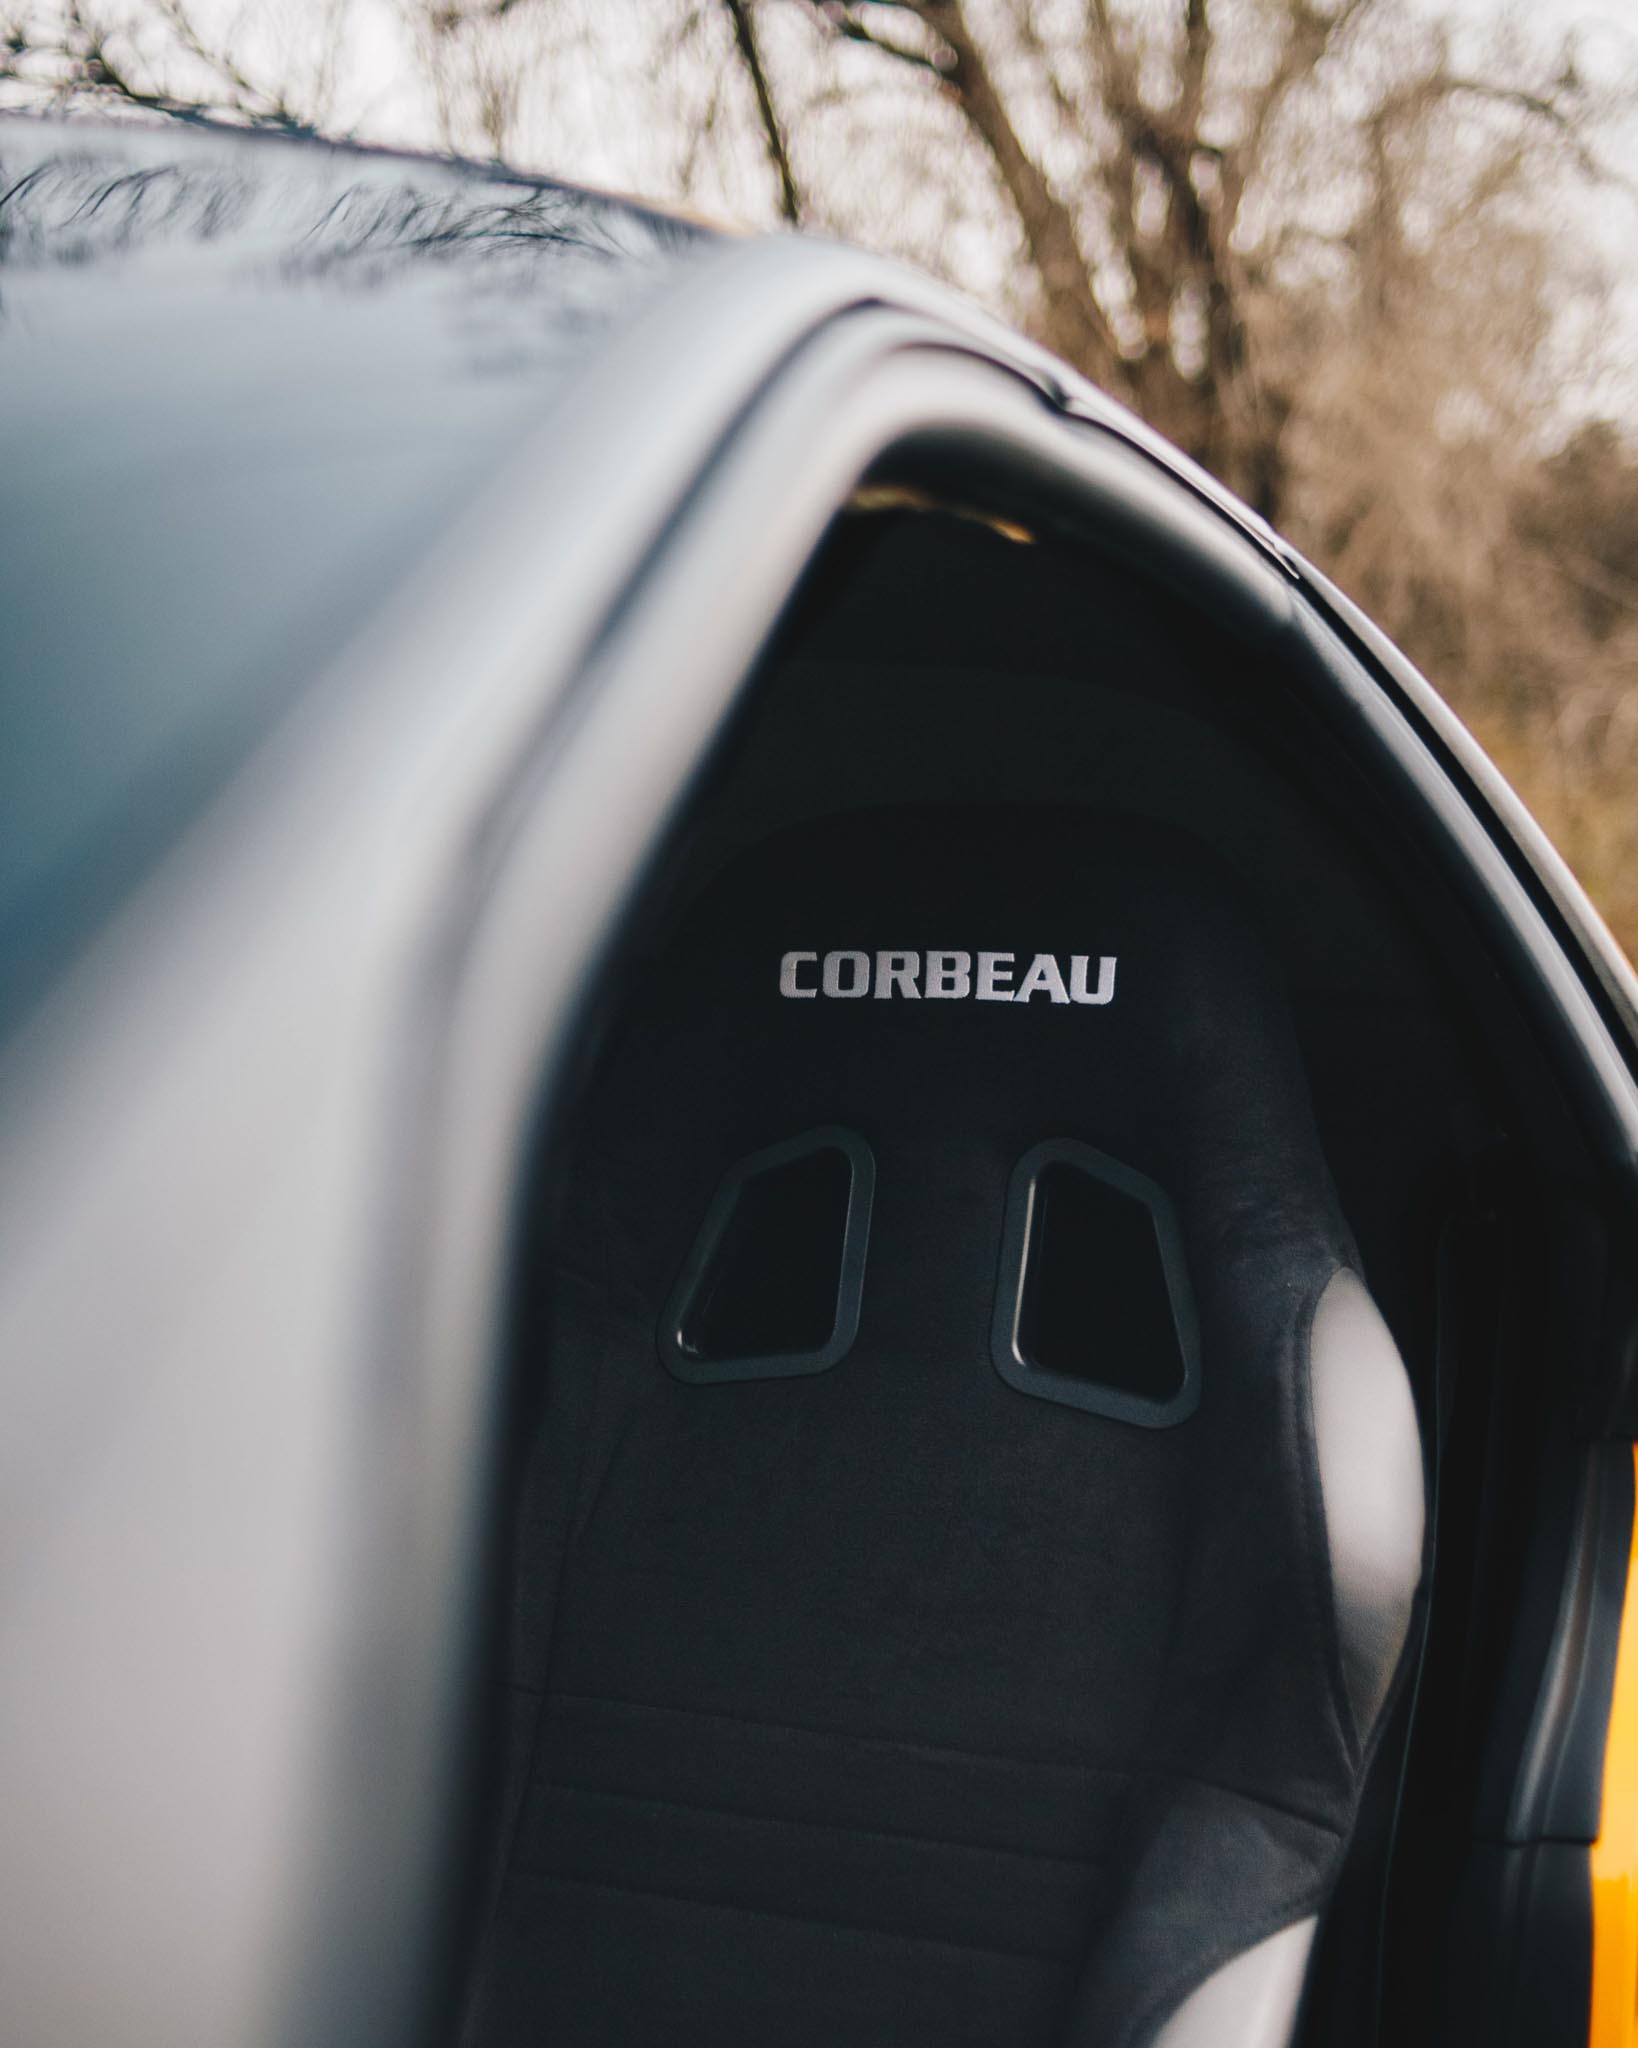 Corbeau seats C5 Corvette